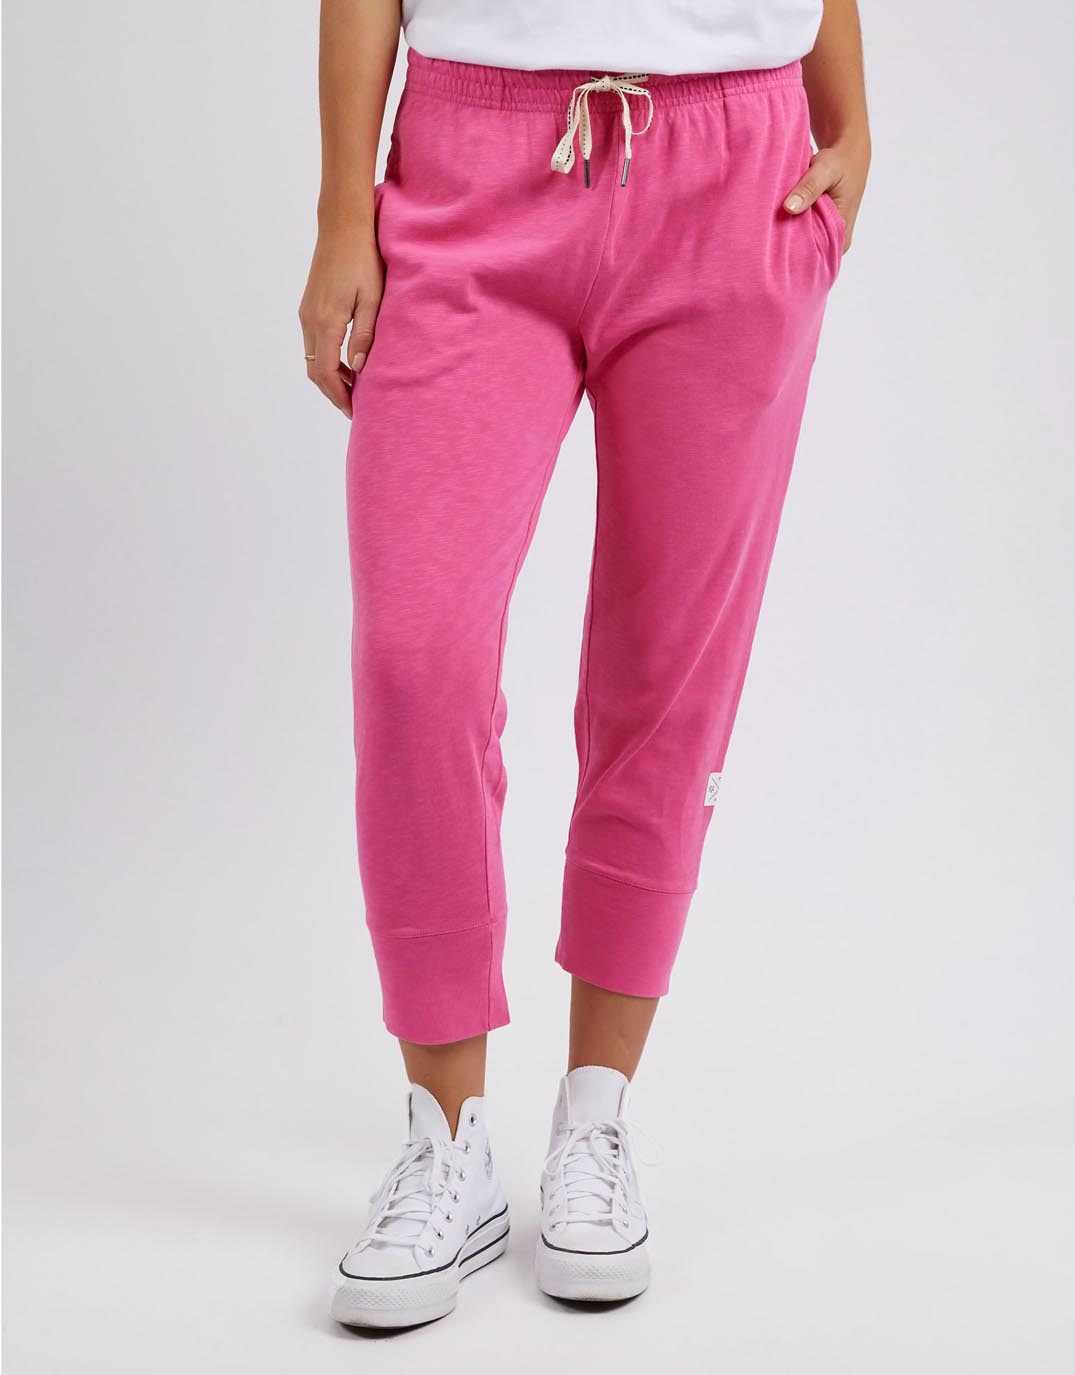 elm-3-4-brunch-pants-shocking-pink-womens-clothing